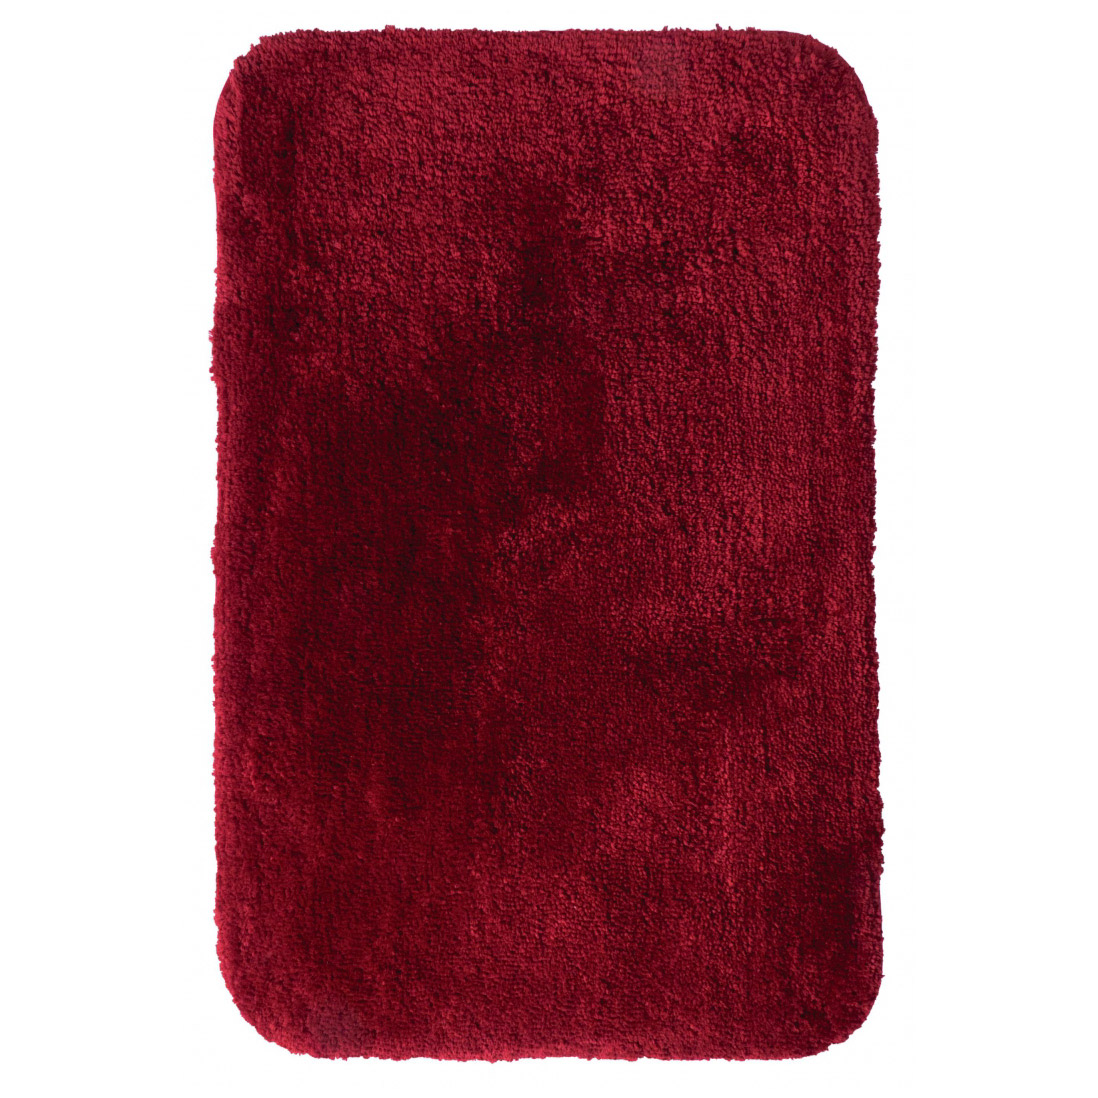 Коврик для ванной комнаты Ridder Chic красный 90х60 см коврик для ванной комнаты ridder chic 90x60 7104301 белый